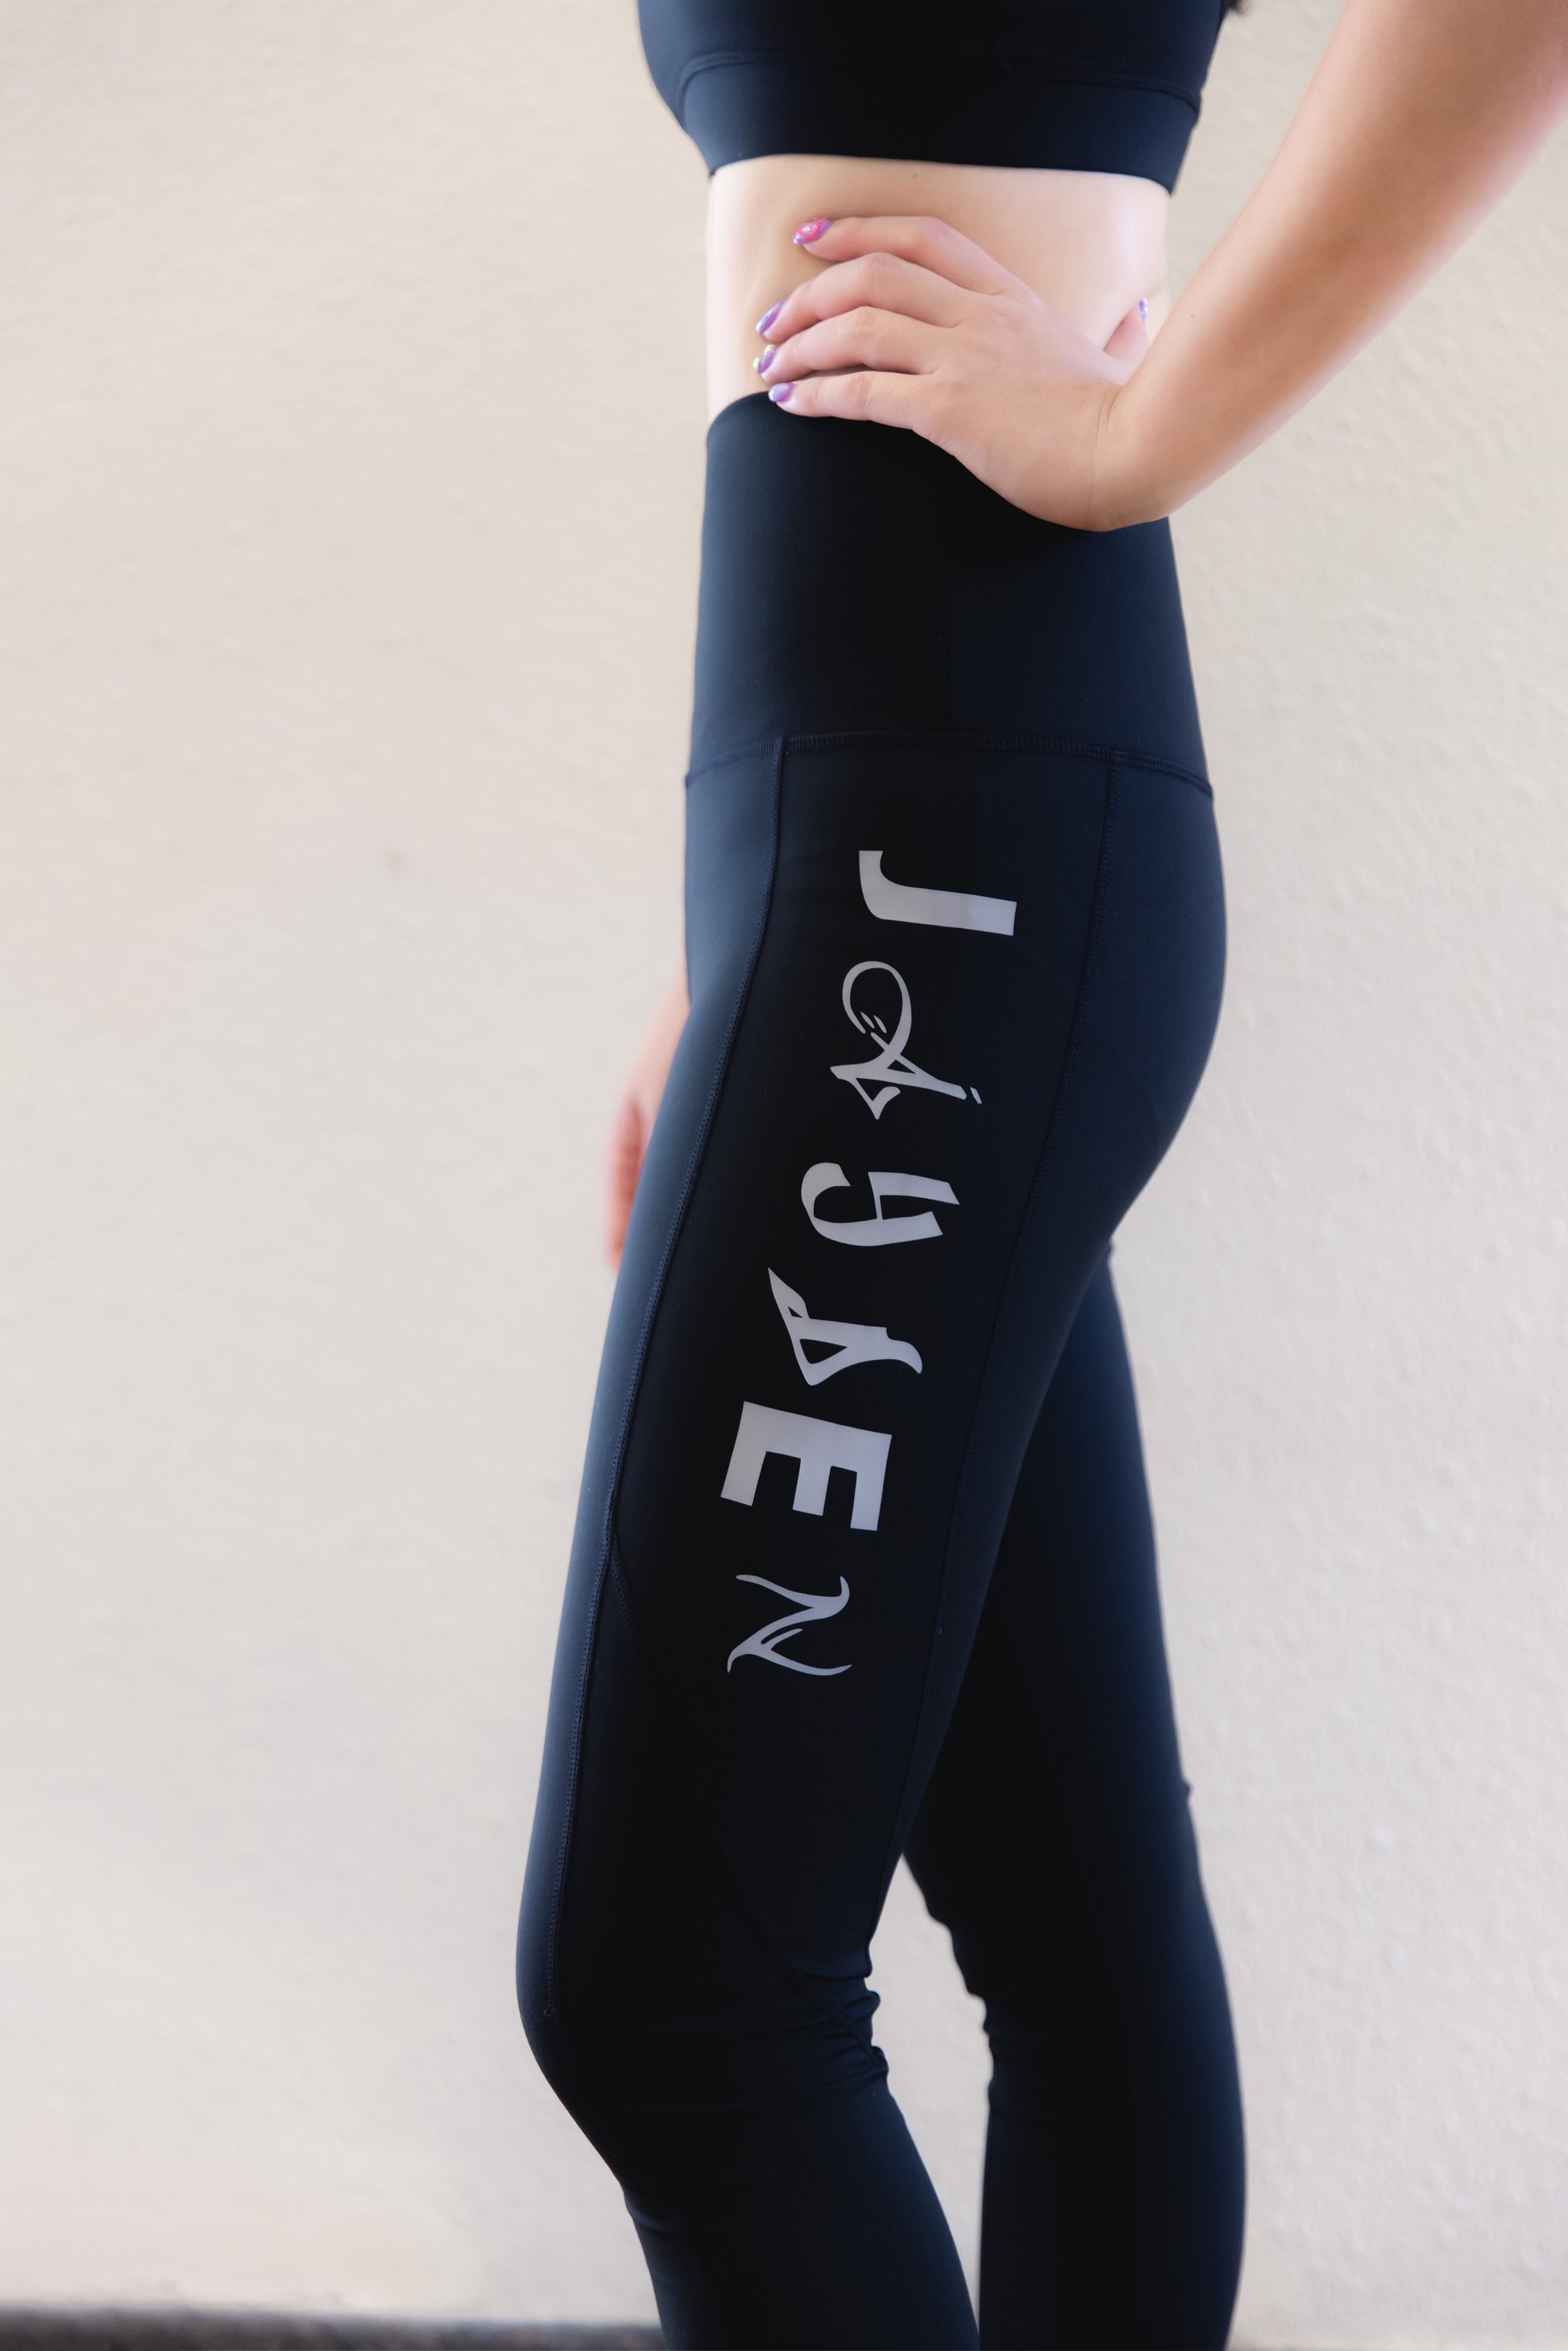 Basic bottom with back pocket leggings – LG Sportswear Compamy